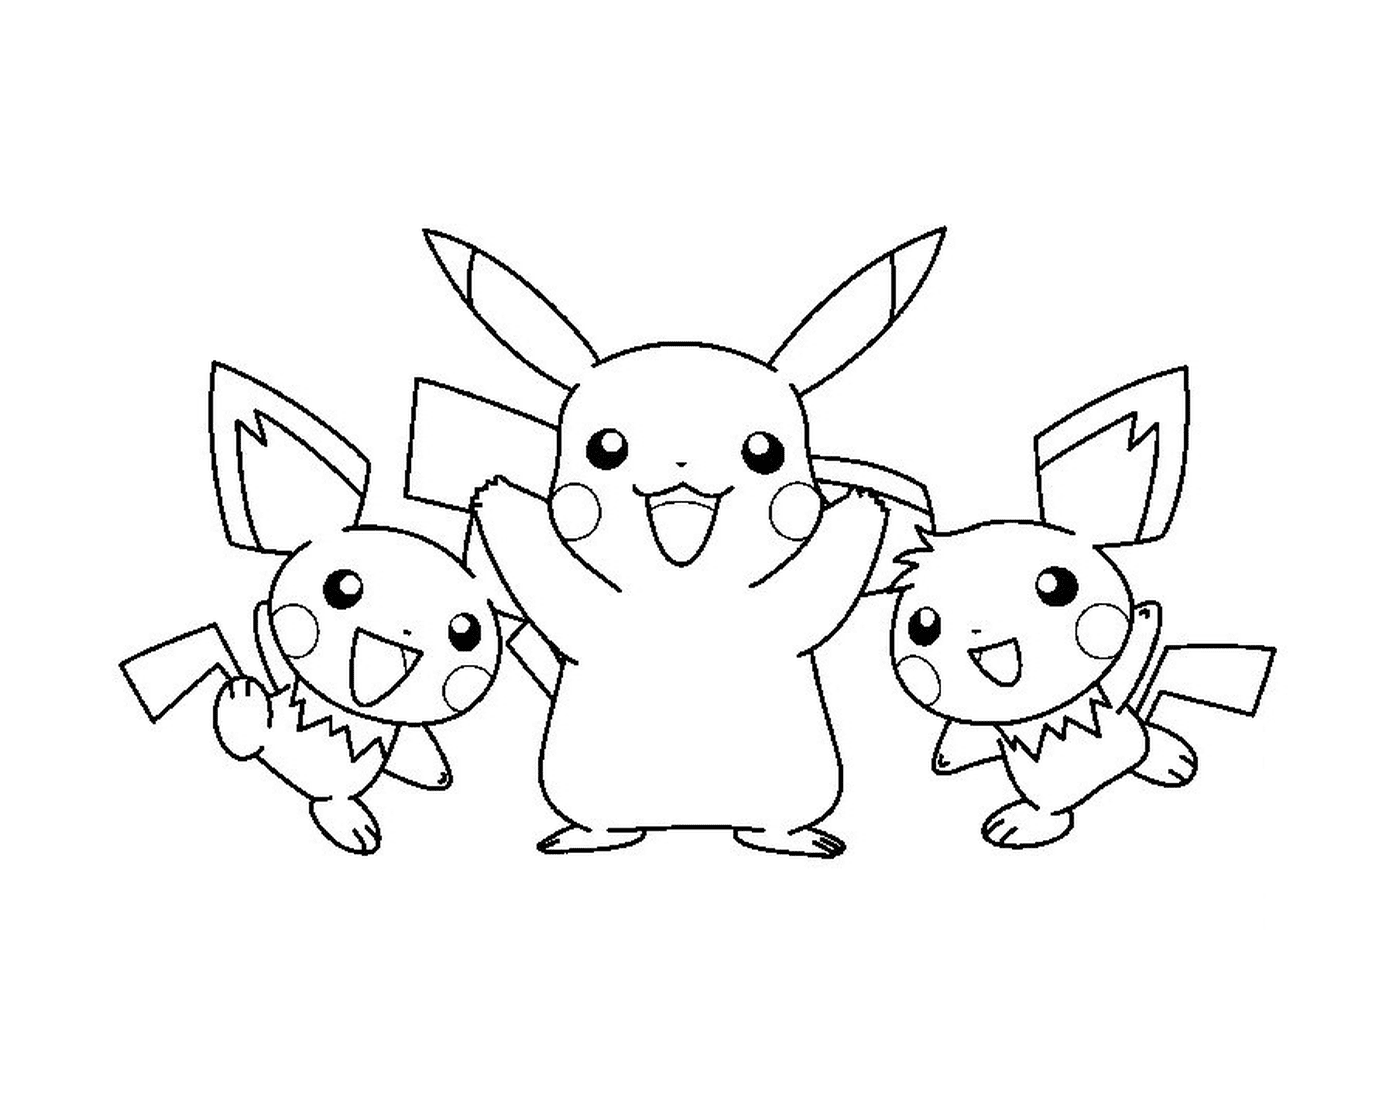  Three Pokémons together 